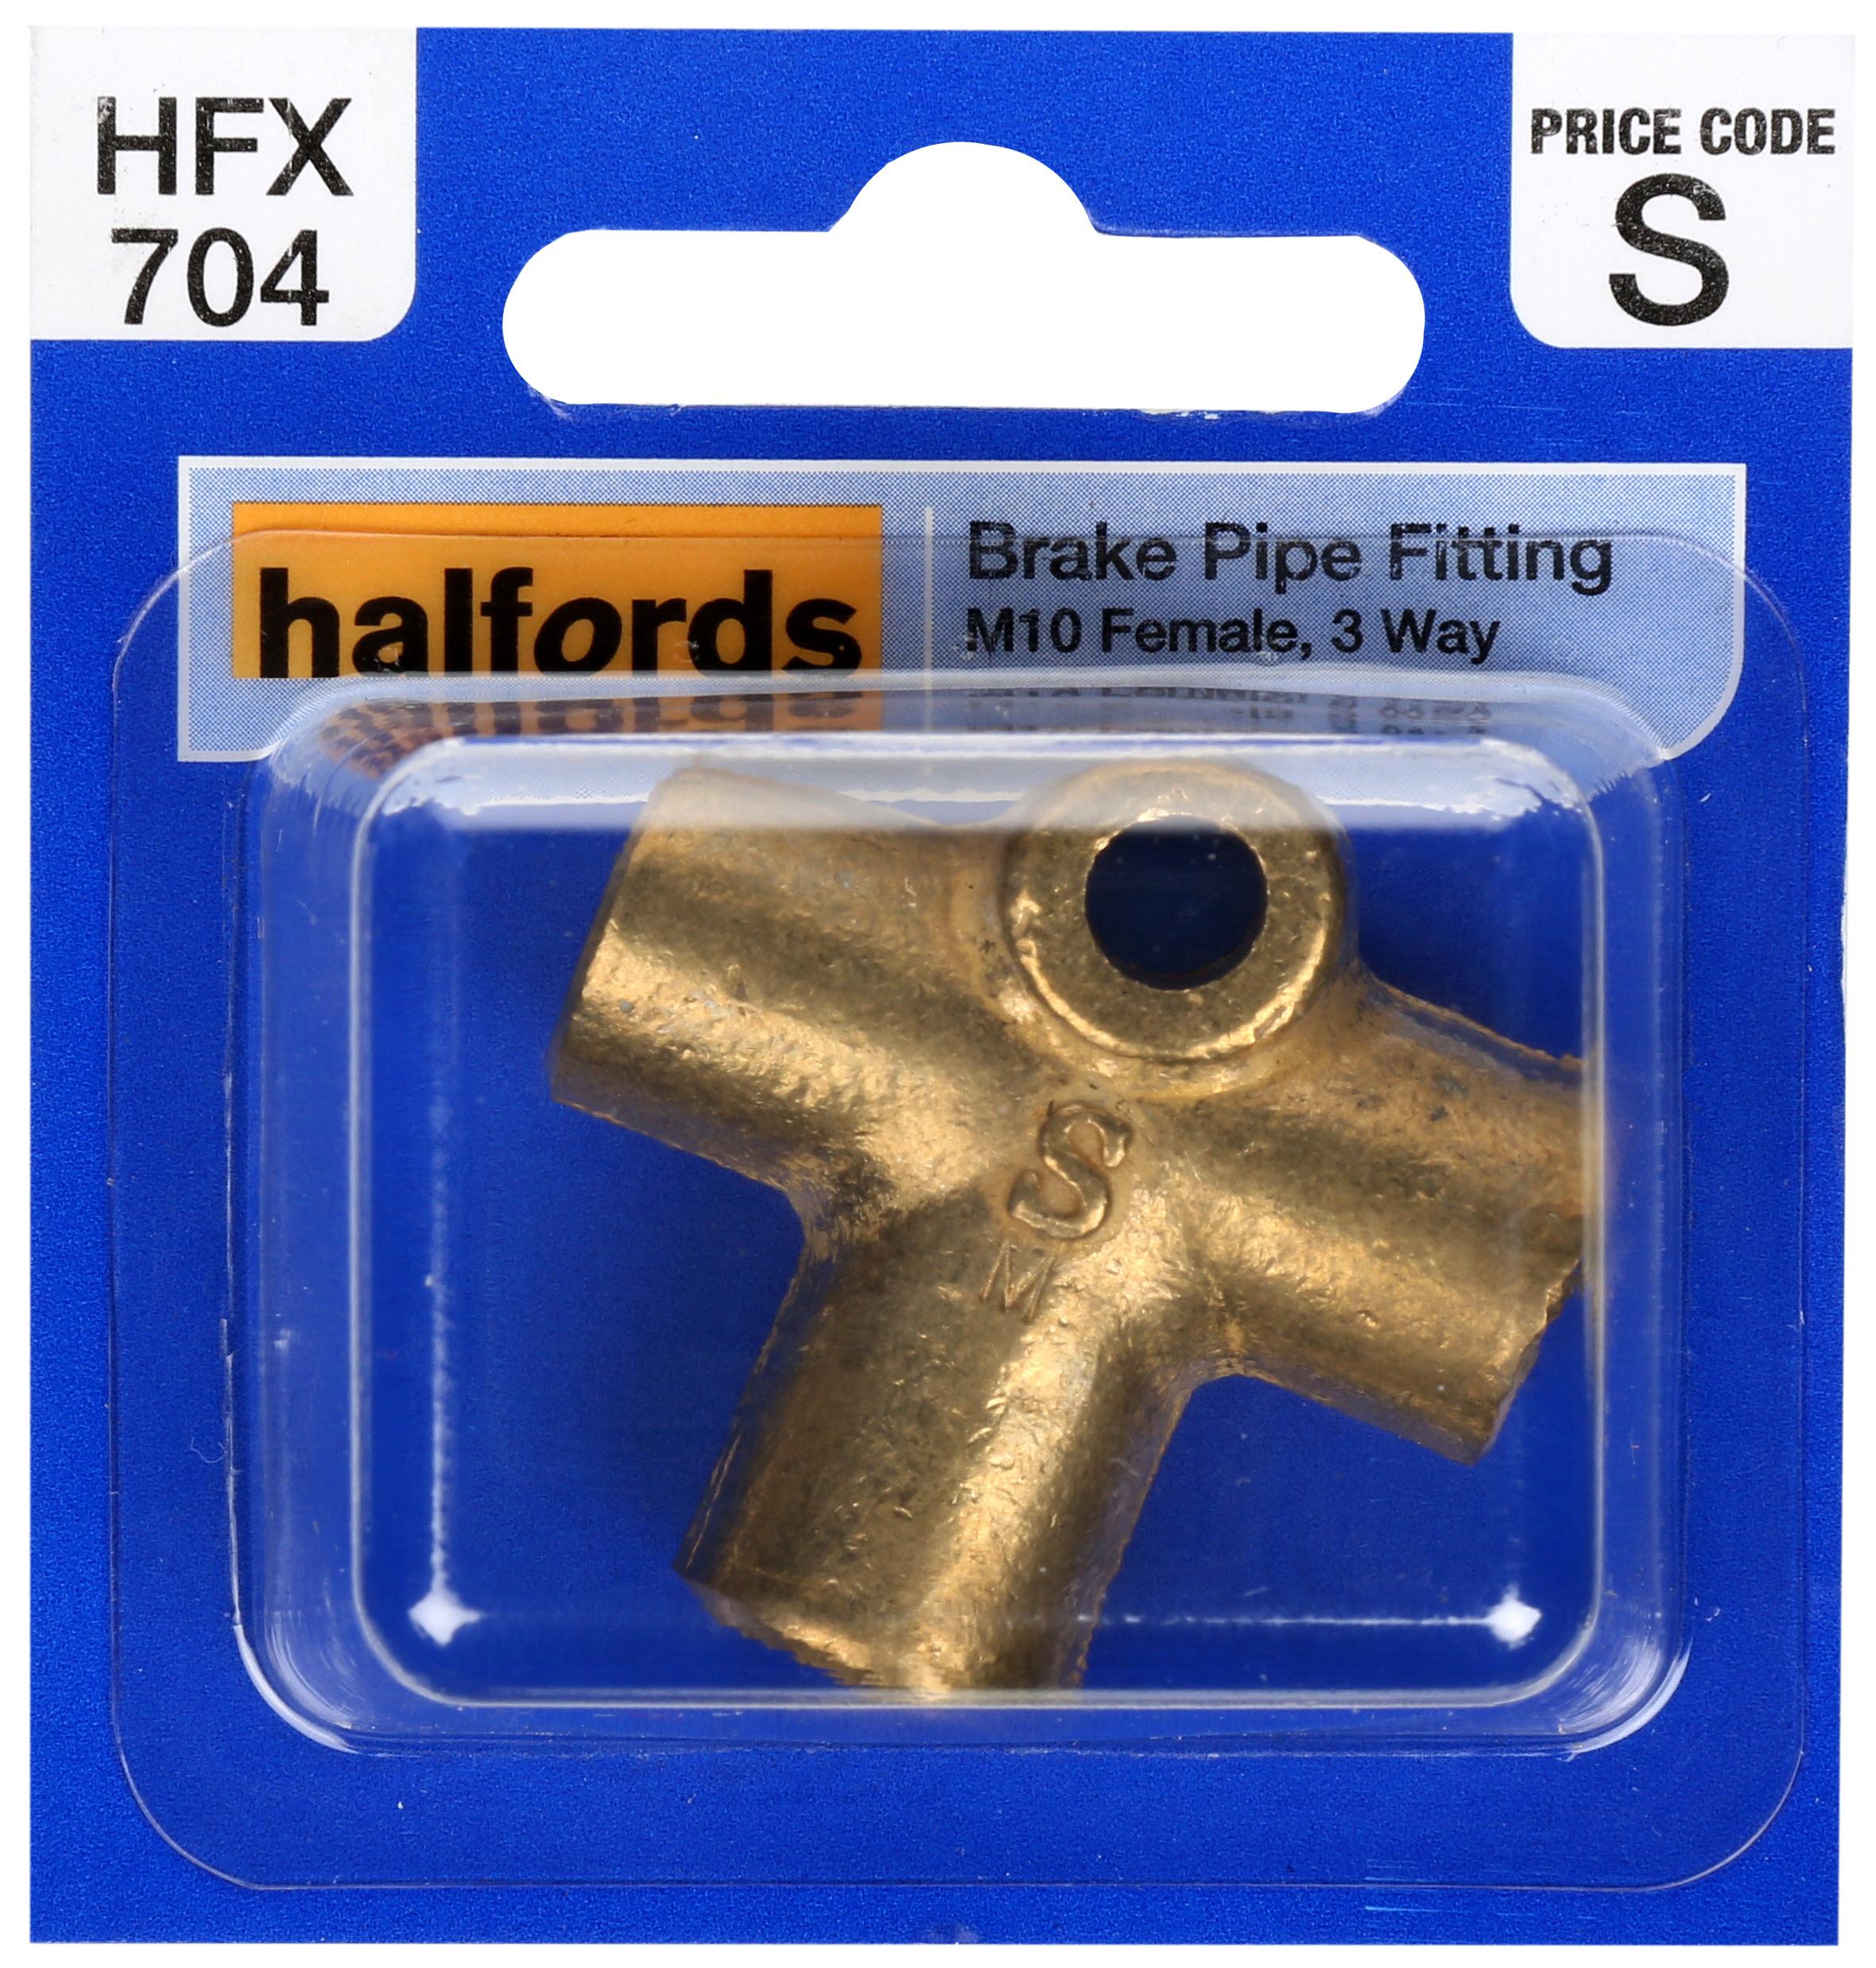 Halfords Brake Pipe Fitting M10 3 Way